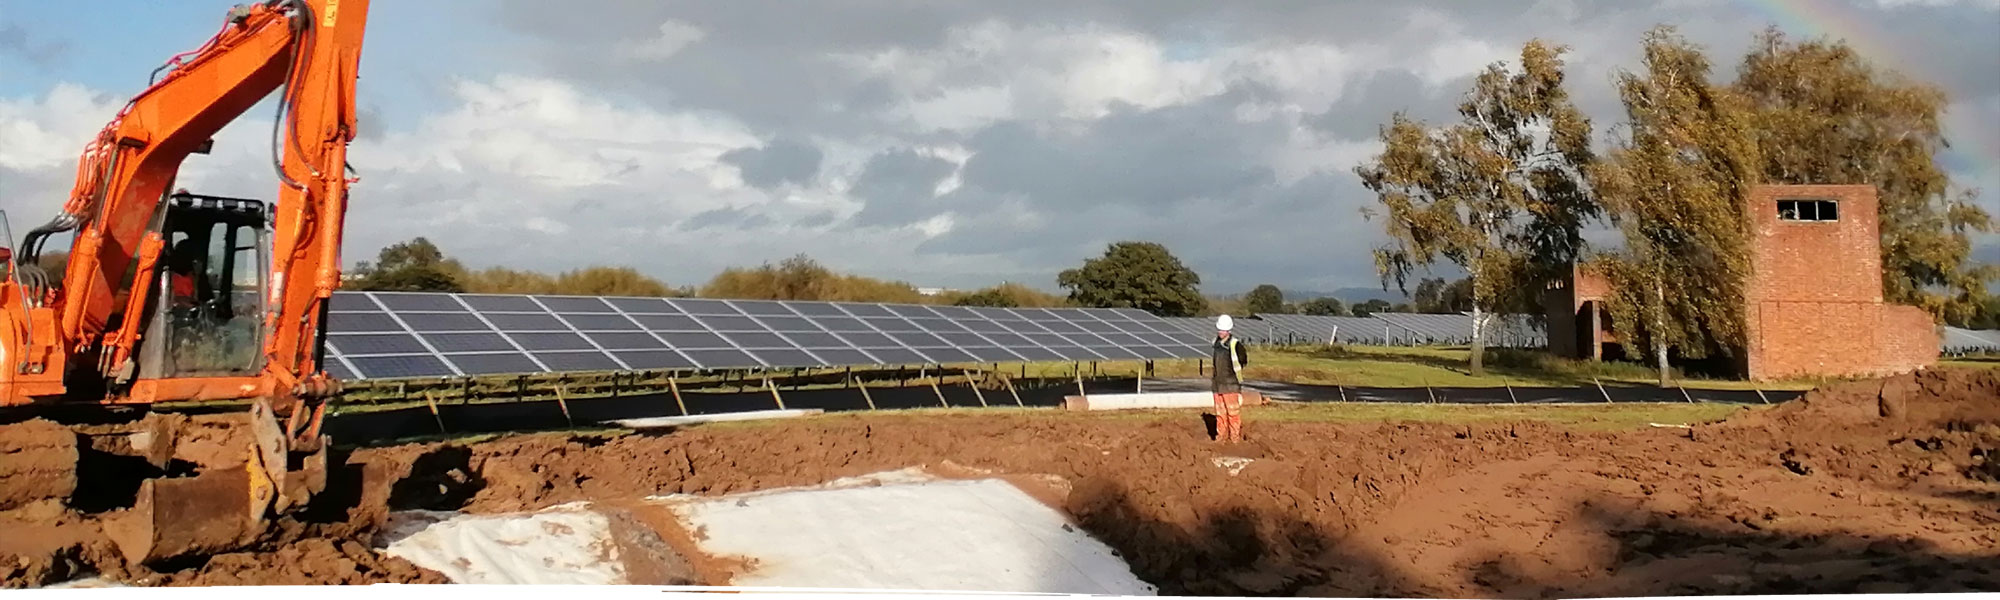 Solar panels at farm in Wrexham